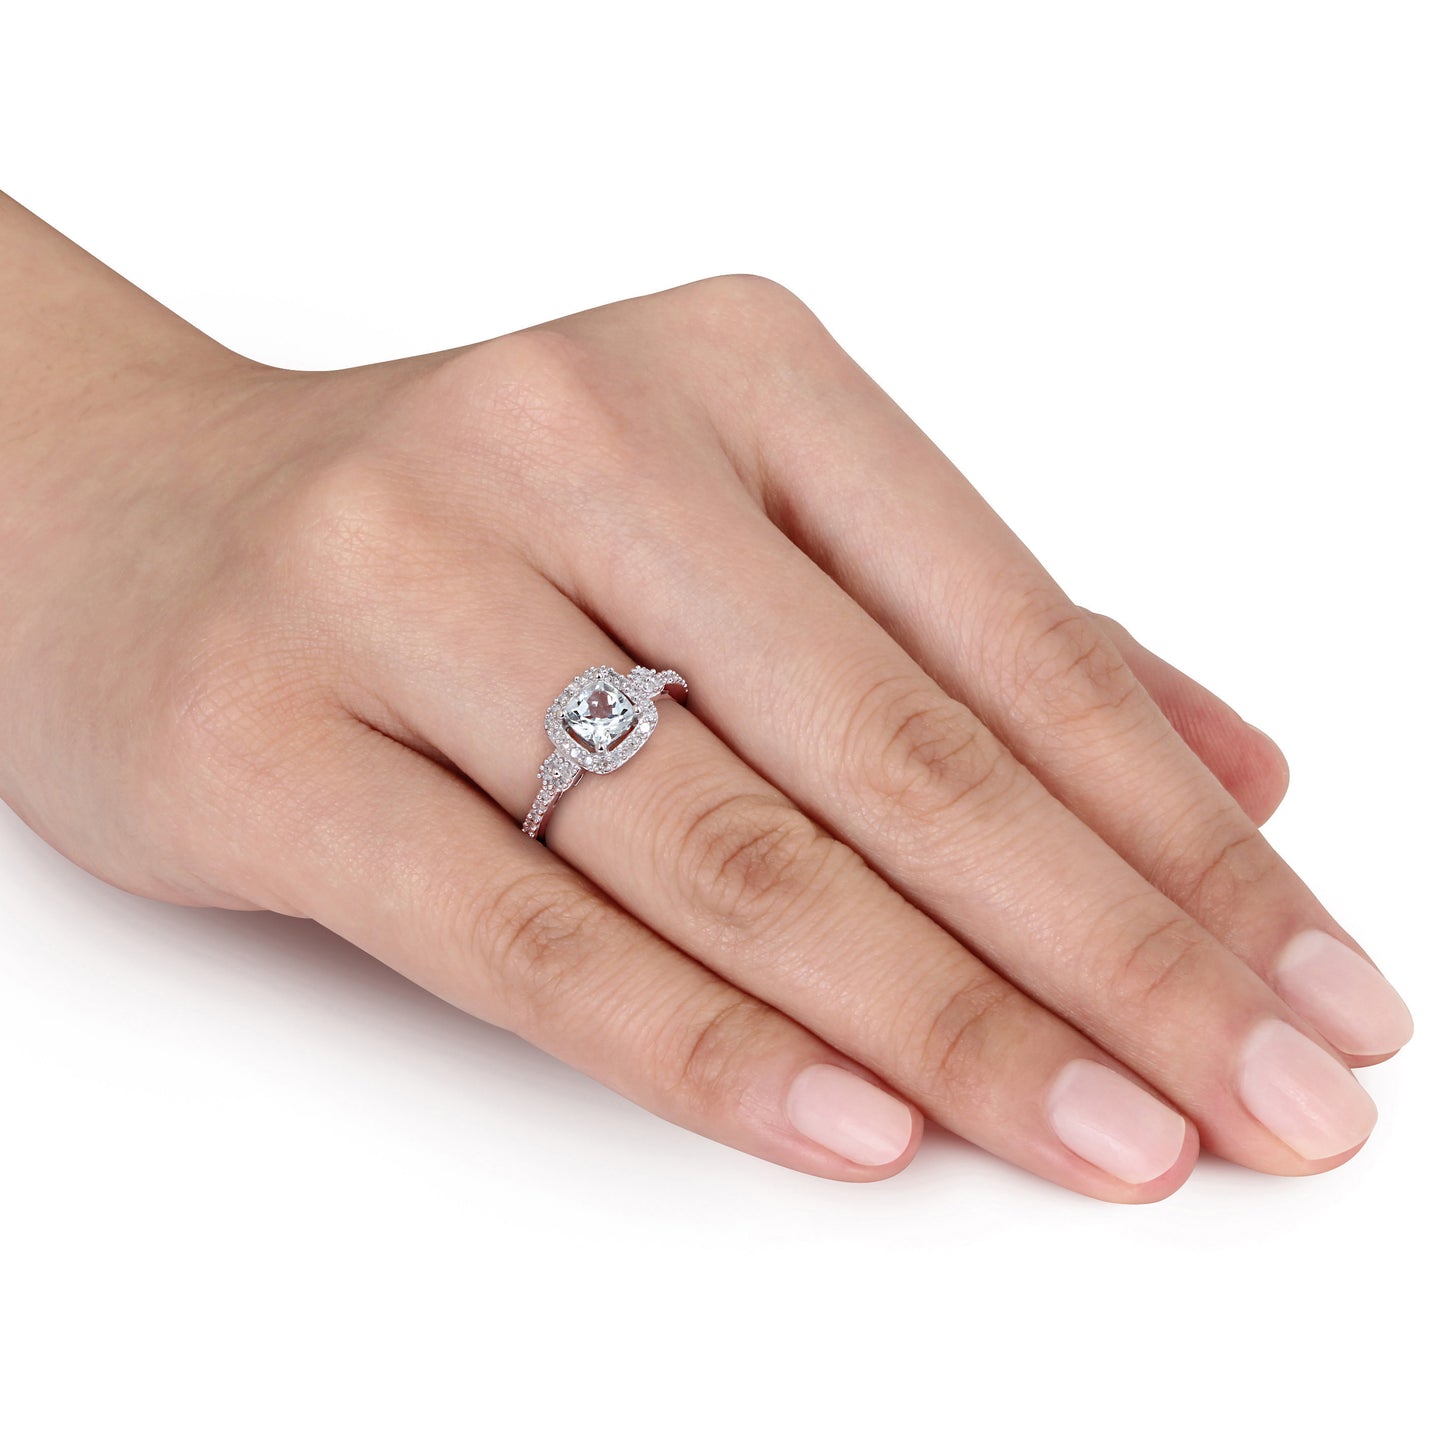 Julie Leah Aquamarine & Diamonds Halo Ring in 10k White Gold